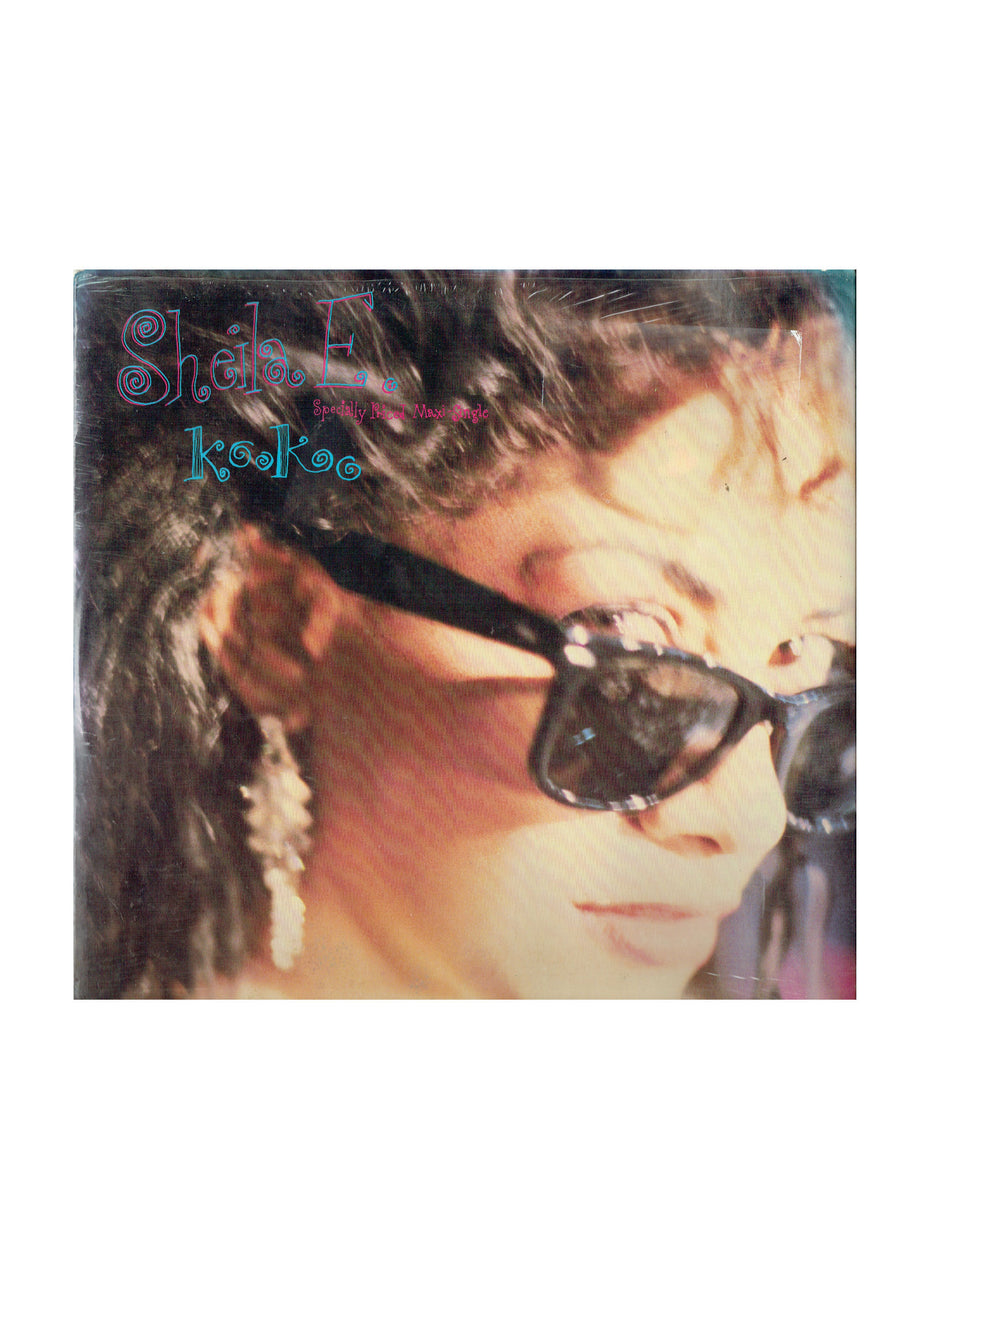 Prince – Sheila E Koo Koo 12 Inch Vinyl Single USA Release Paisley Park Label Preloved : 1987